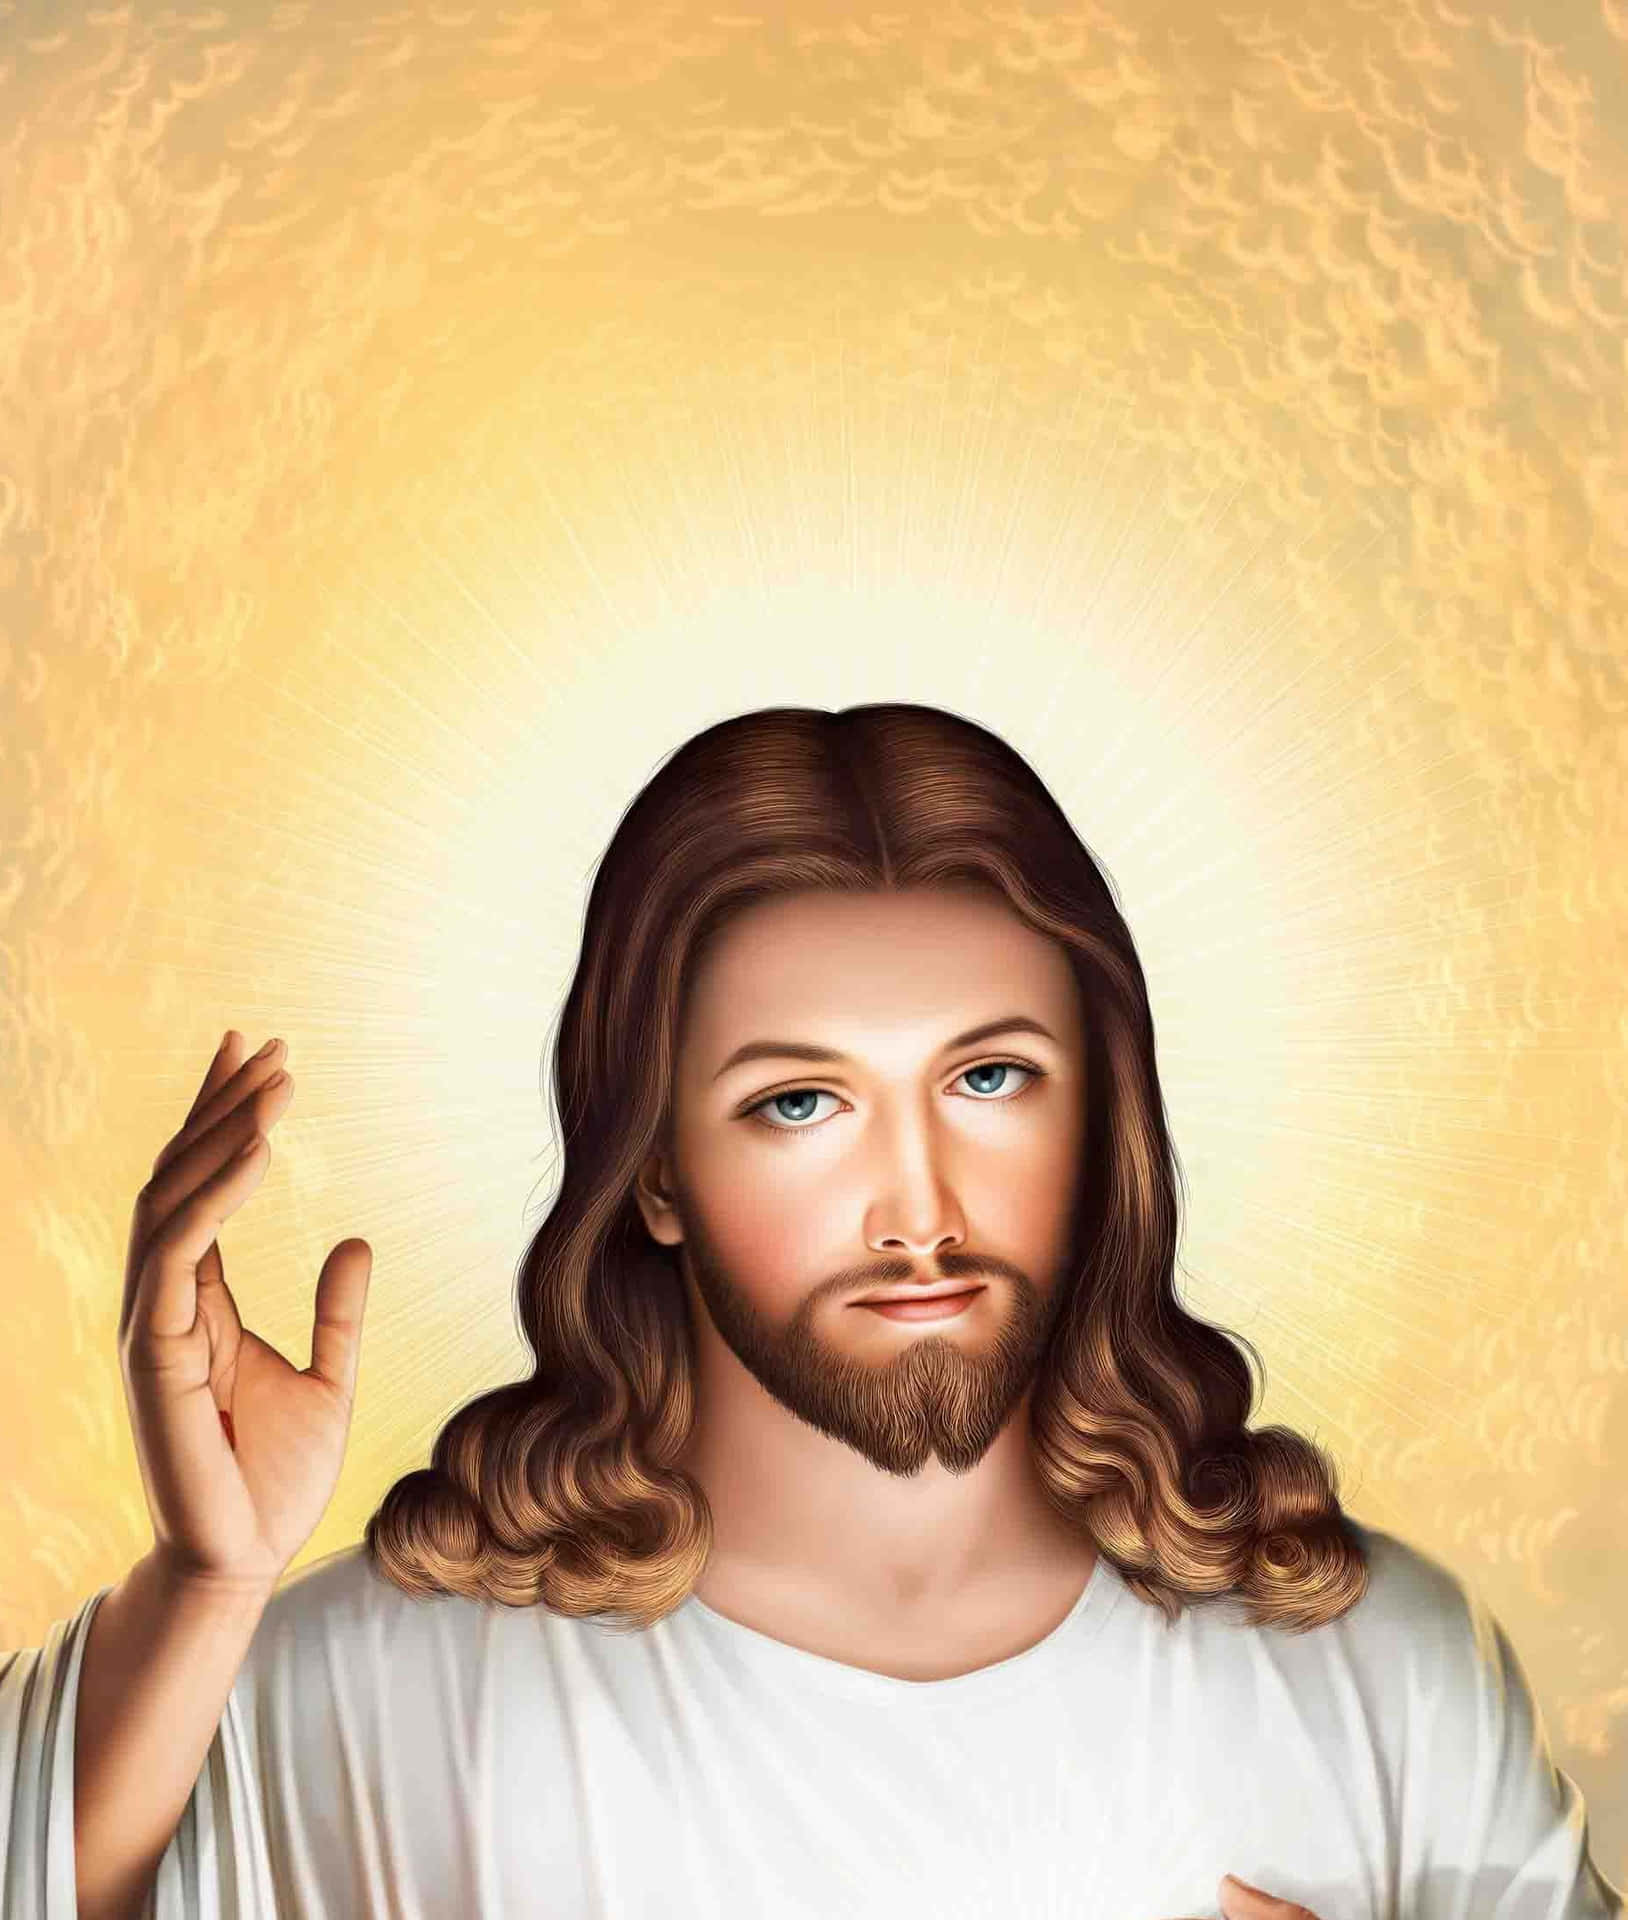 [400+] Jesus Christ Pictures | Wallpapers.com